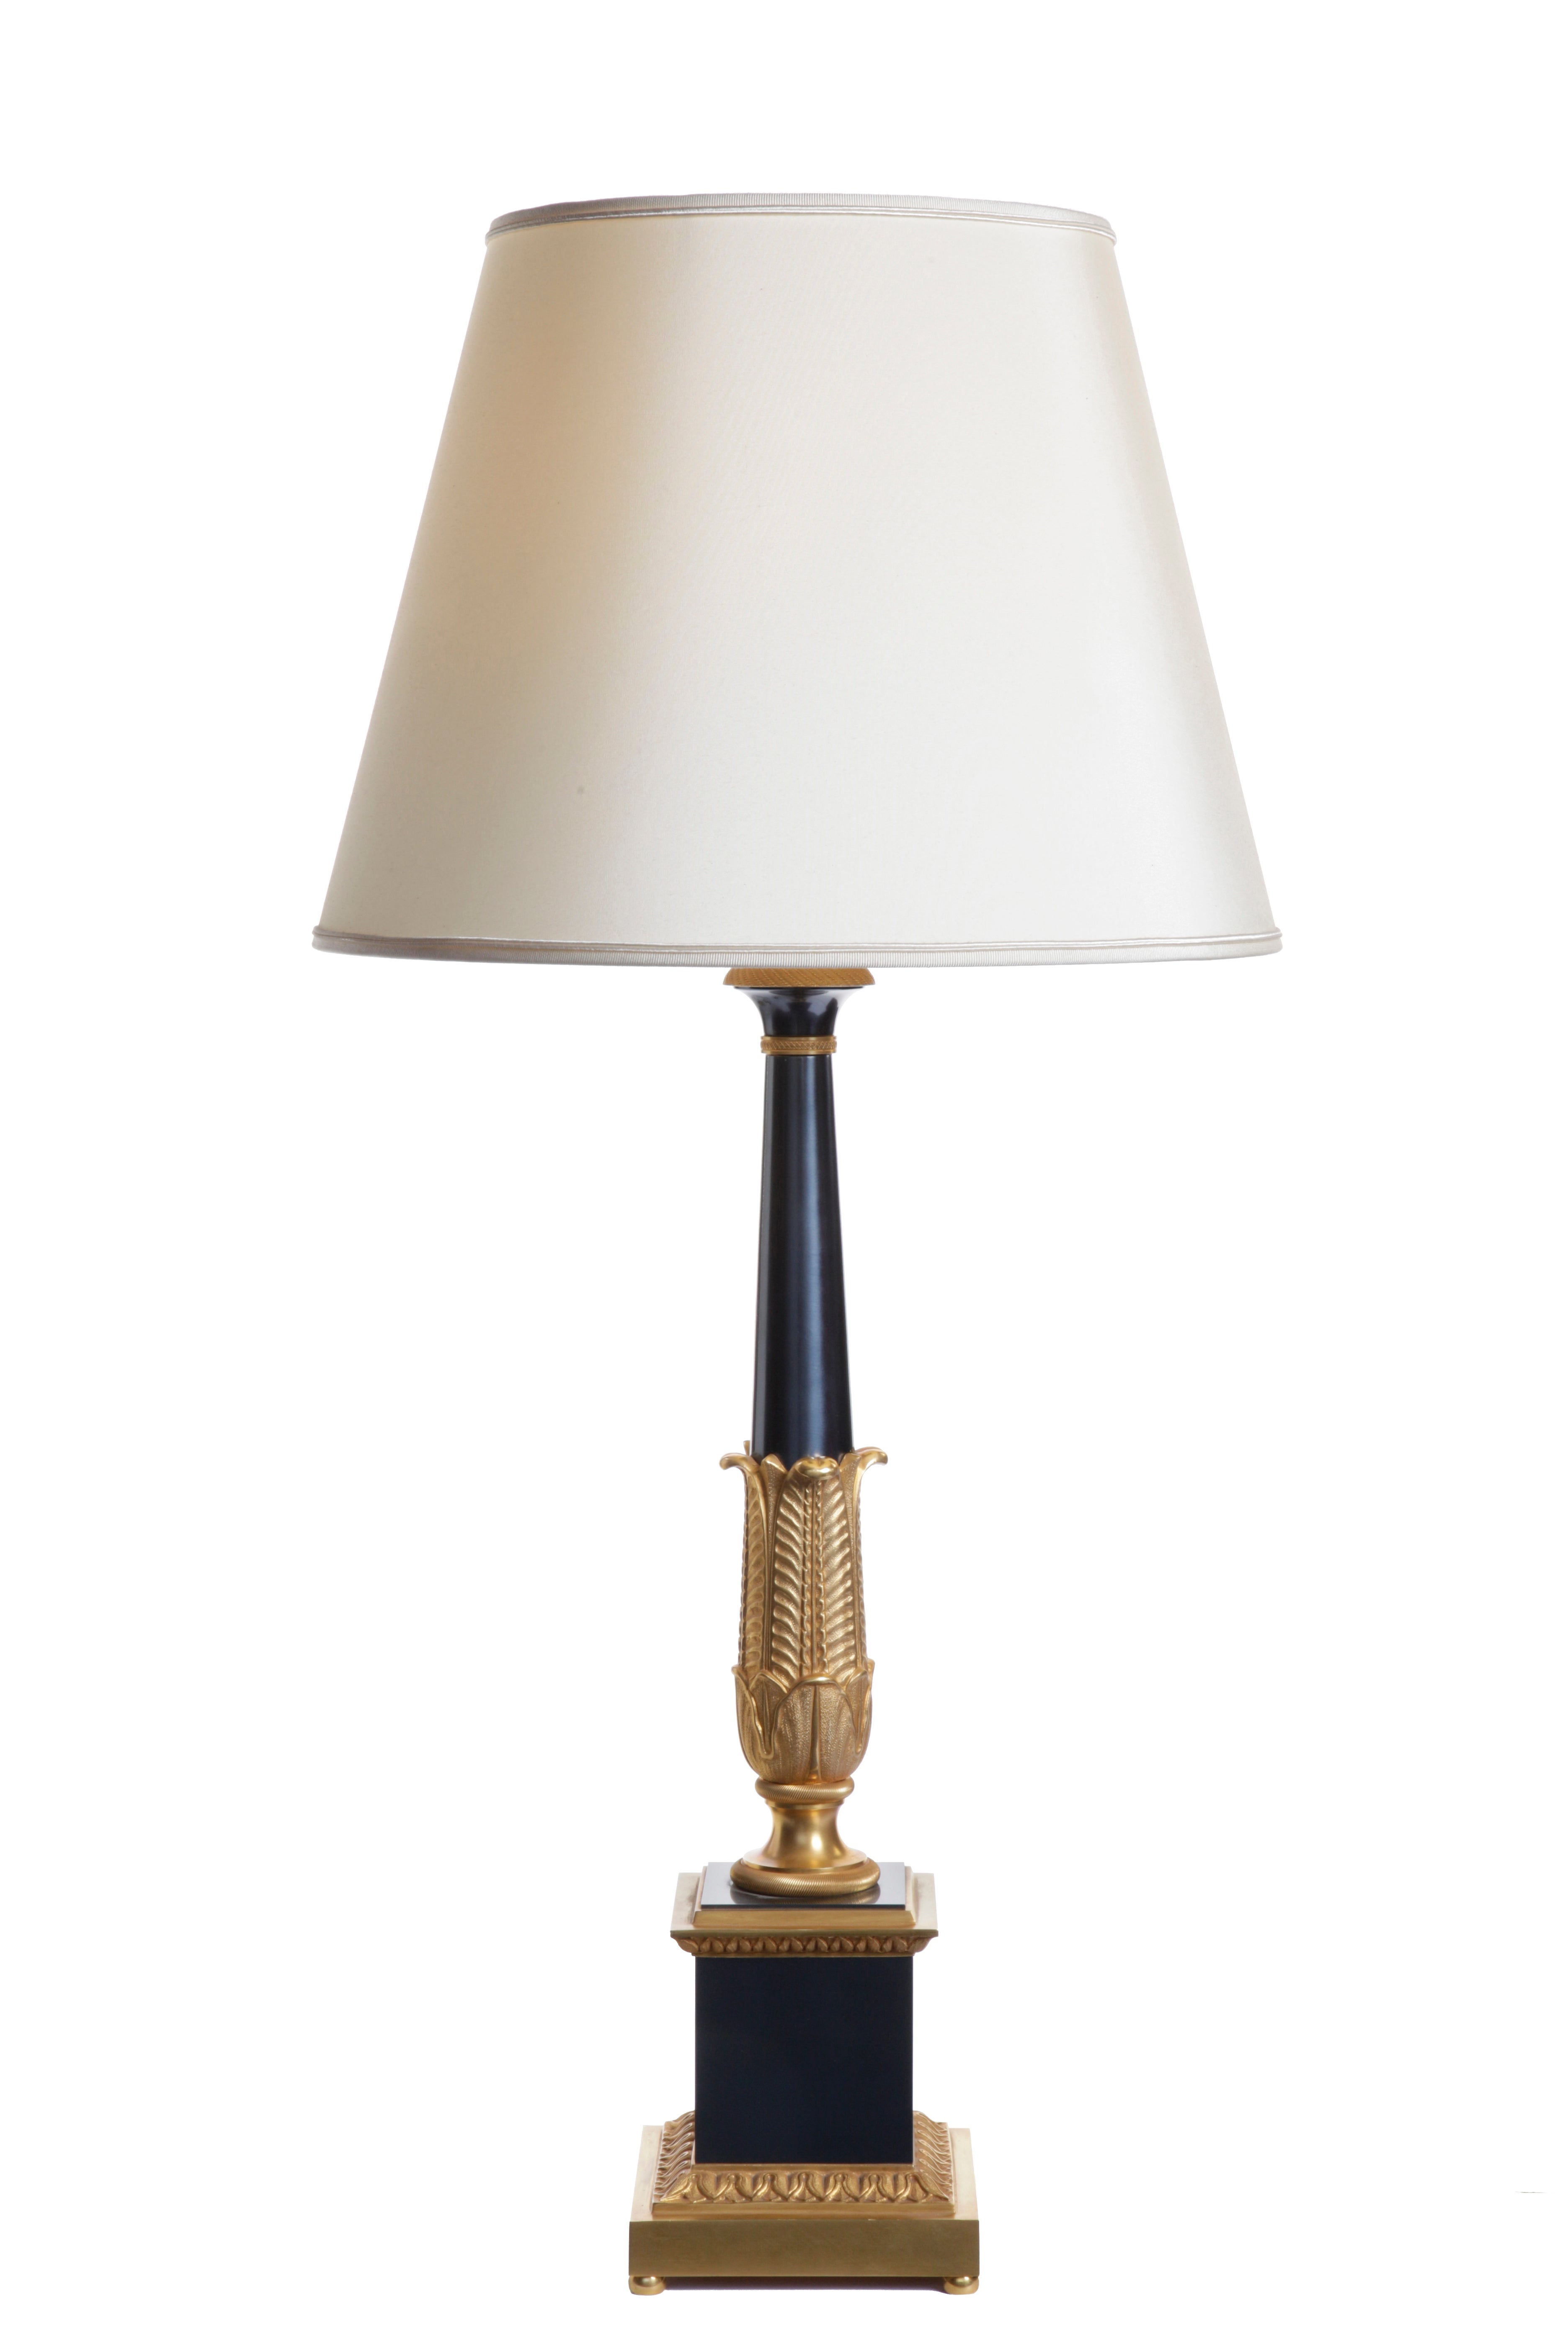 Certified Maison Bagues Table Lamp, Bronze 1 Light #17818